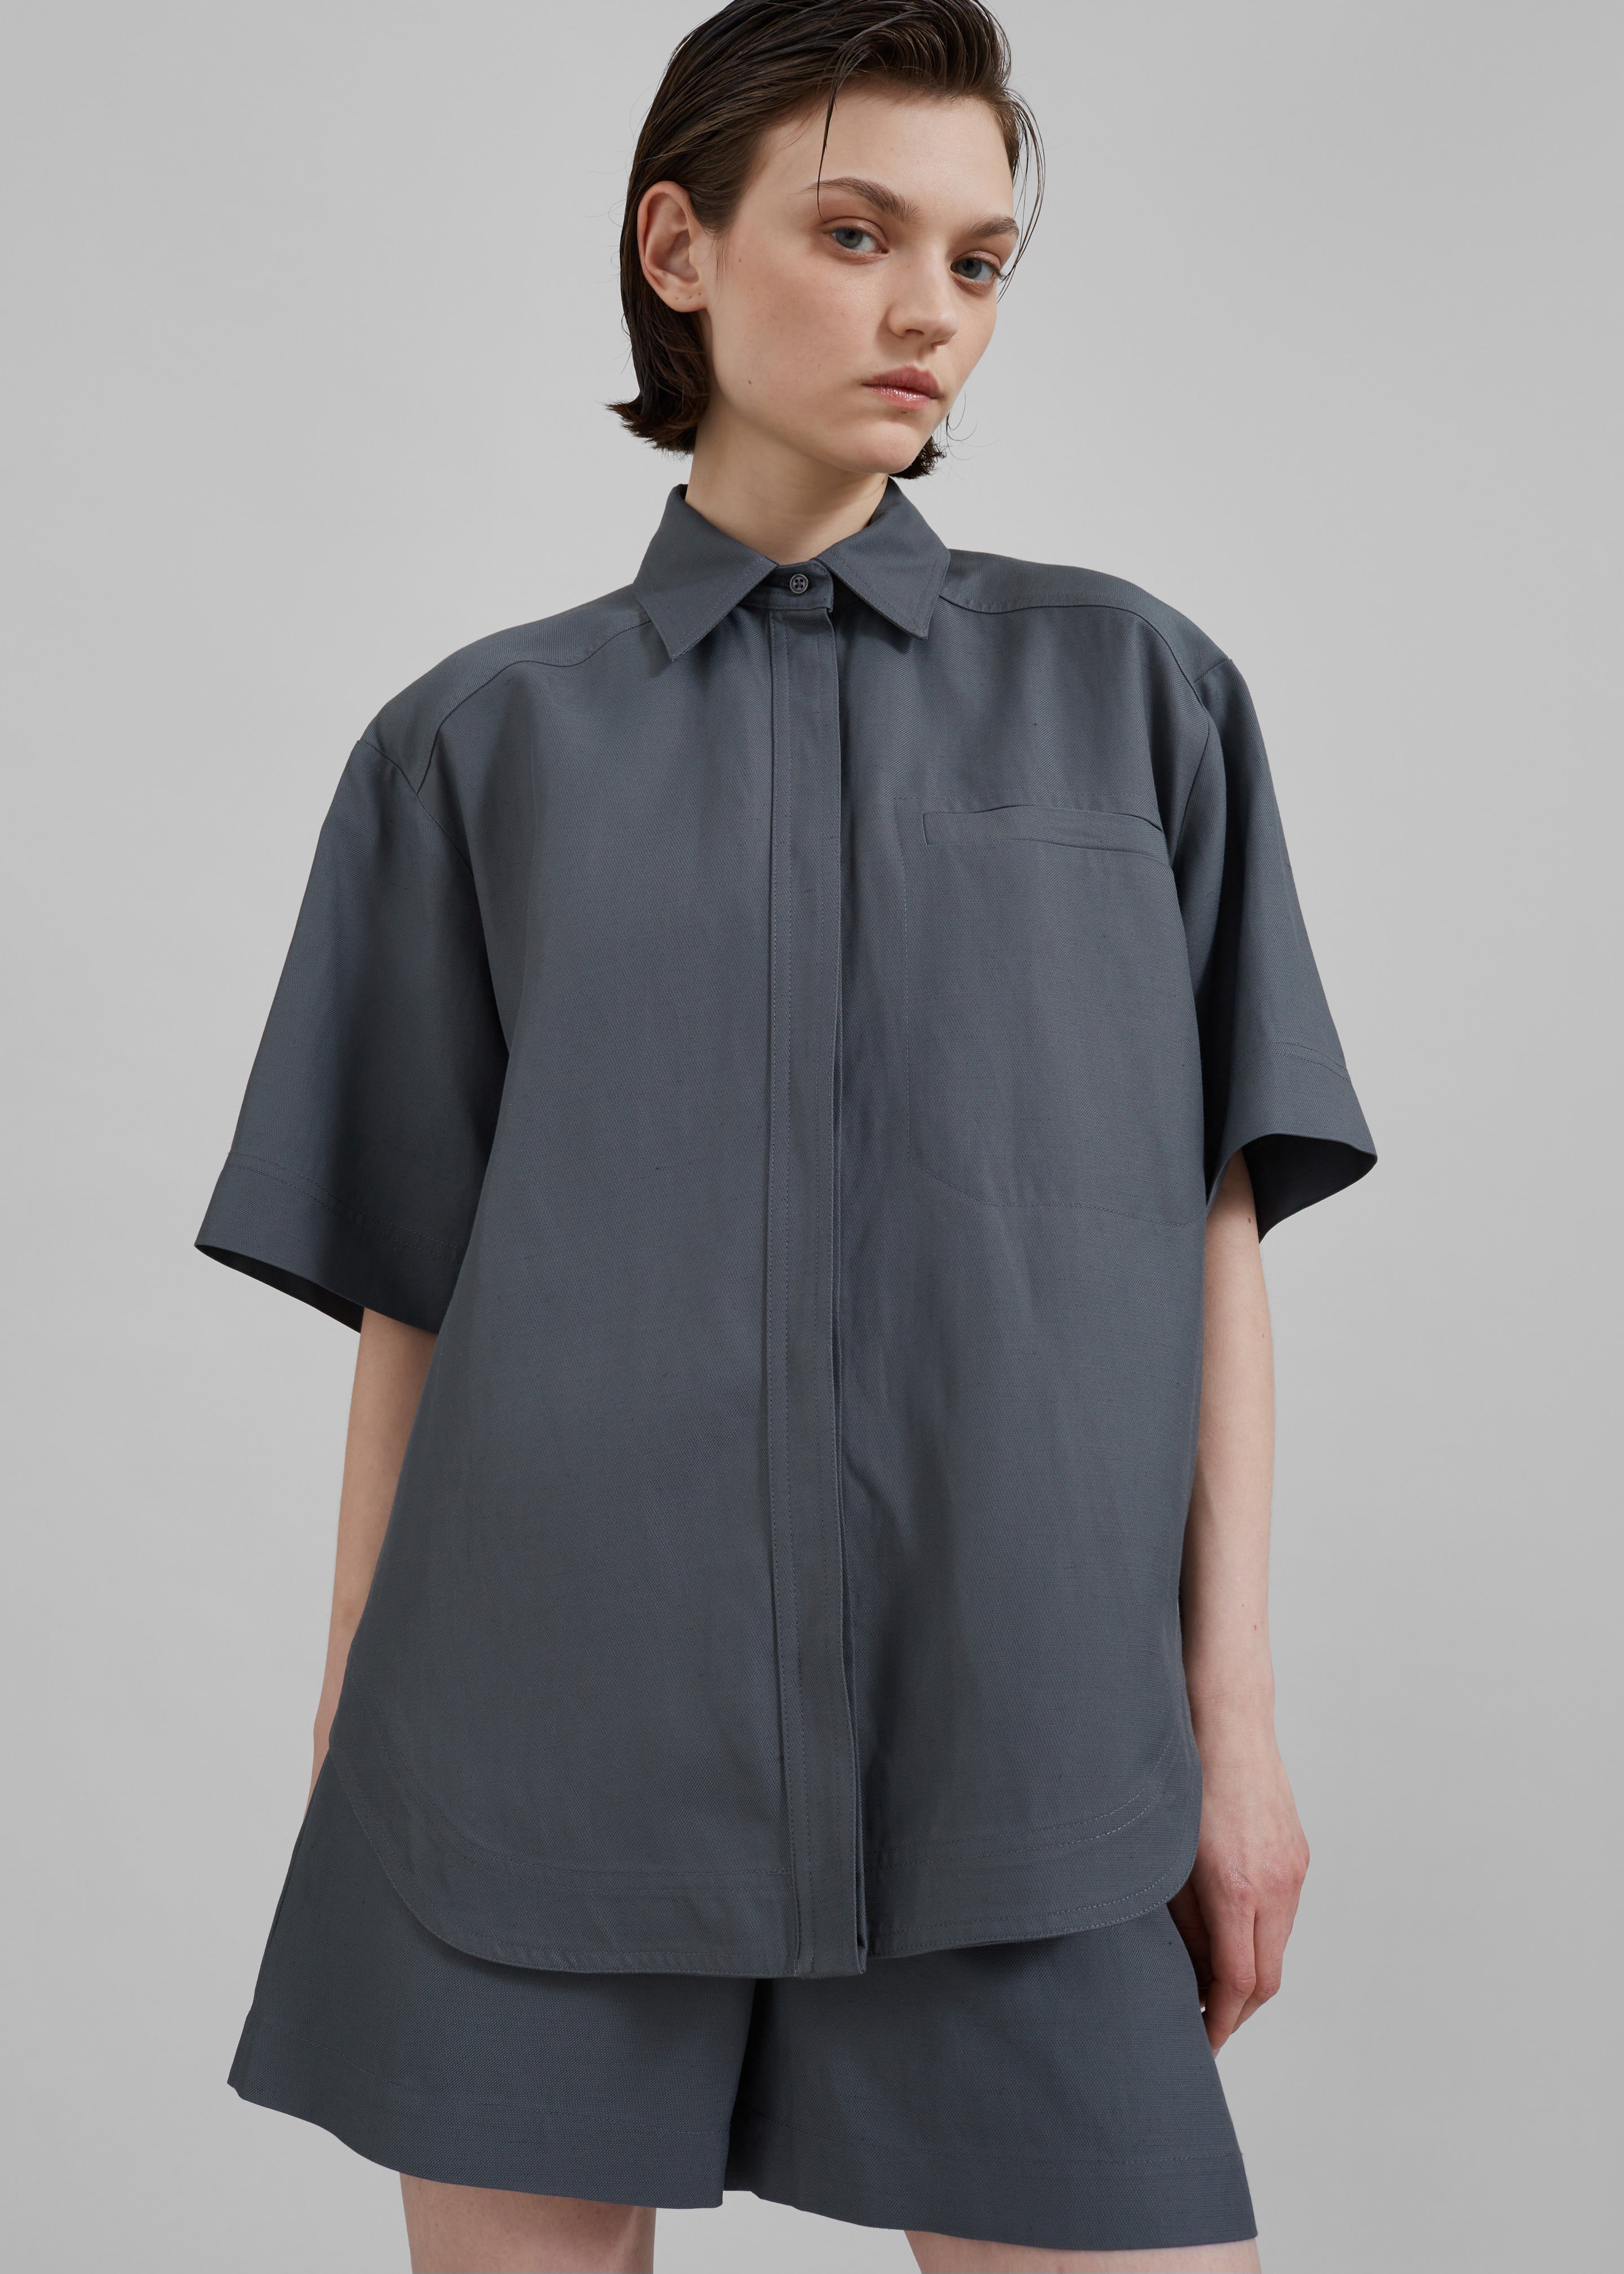 Loulou Studio Moheli Short Sleeve Shirt - Fjord Grey - 5